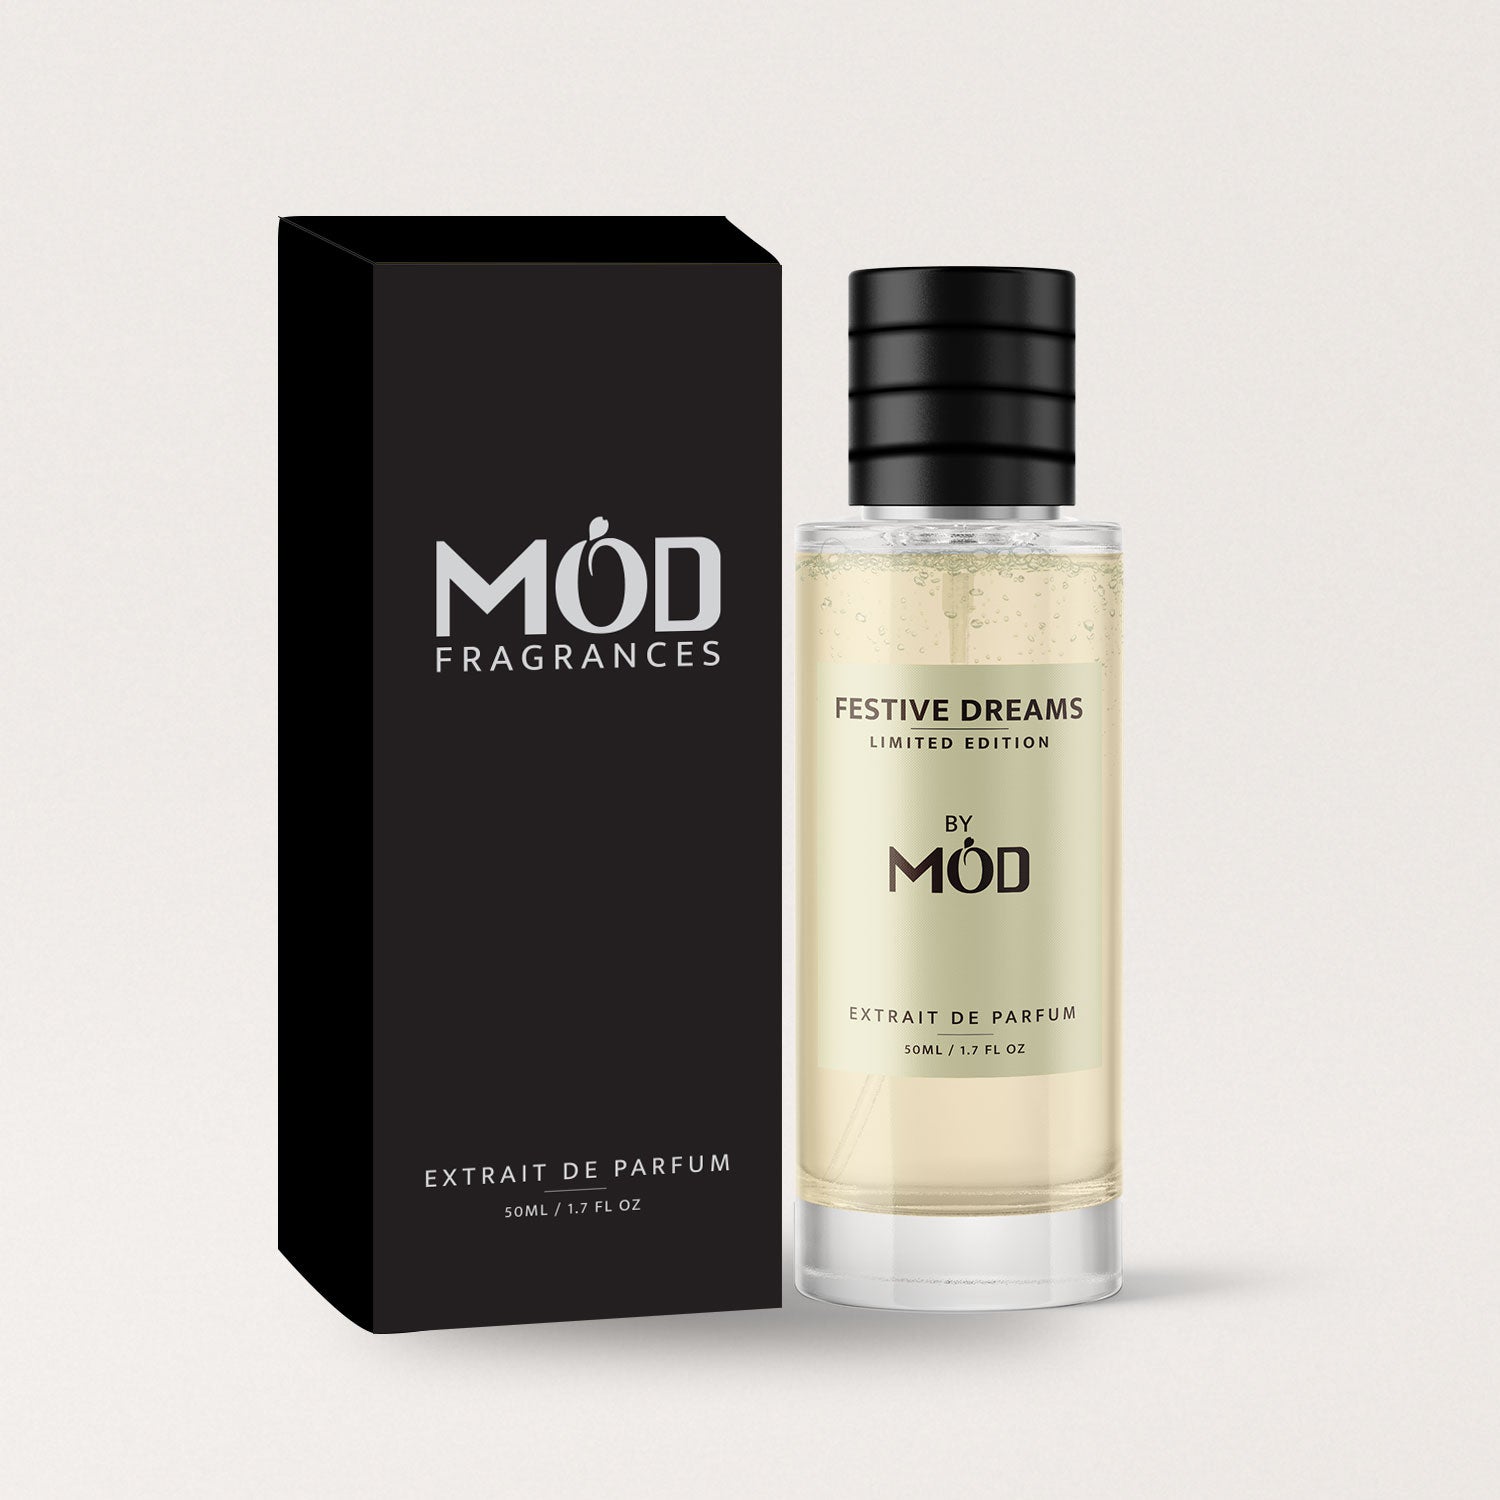 Festive Dreams - Limited Edition - Mod Fragrances